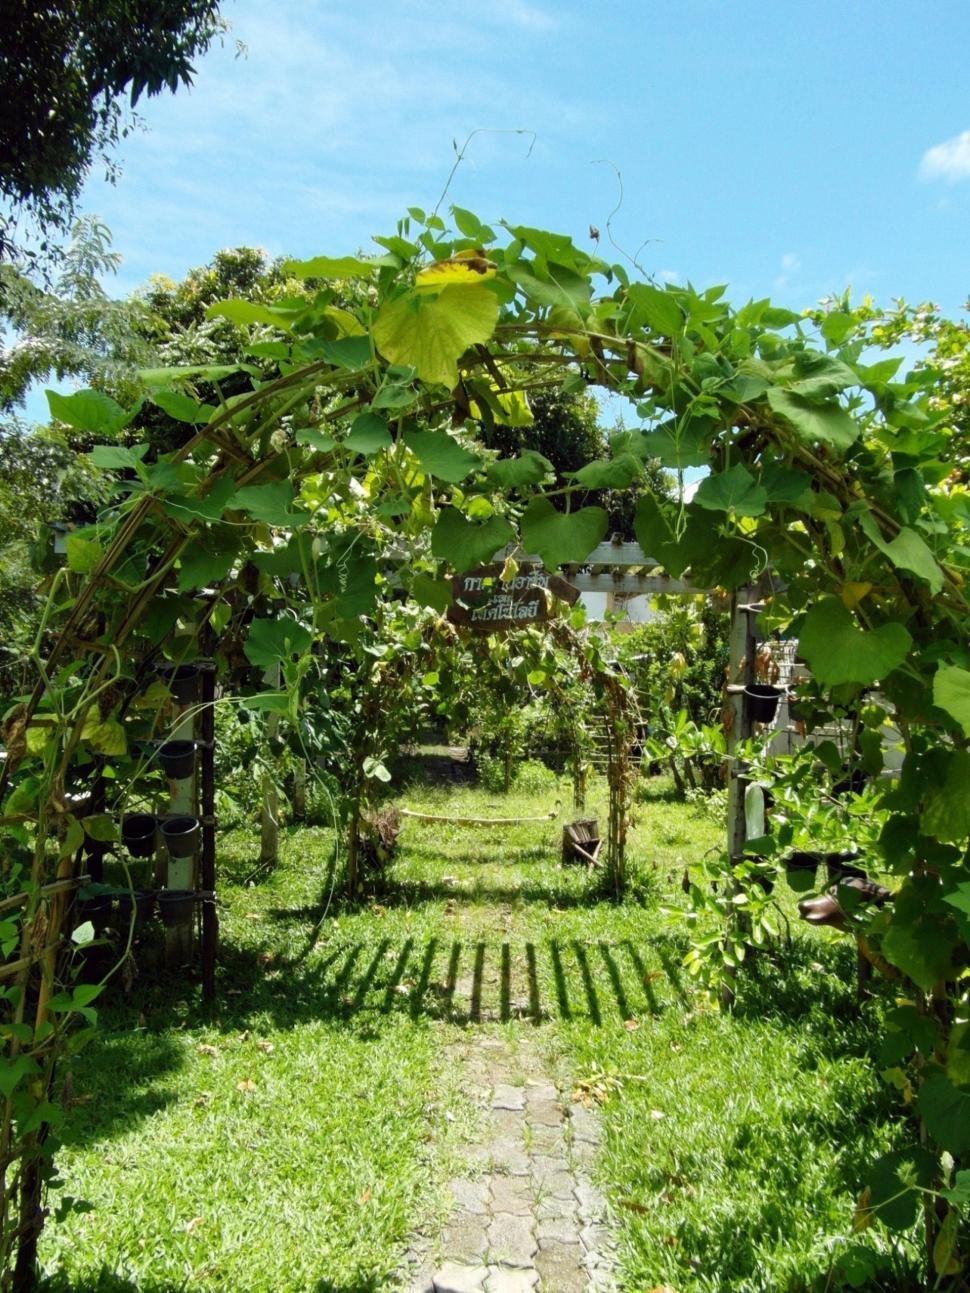 Free Image of Summer Garden Archway 